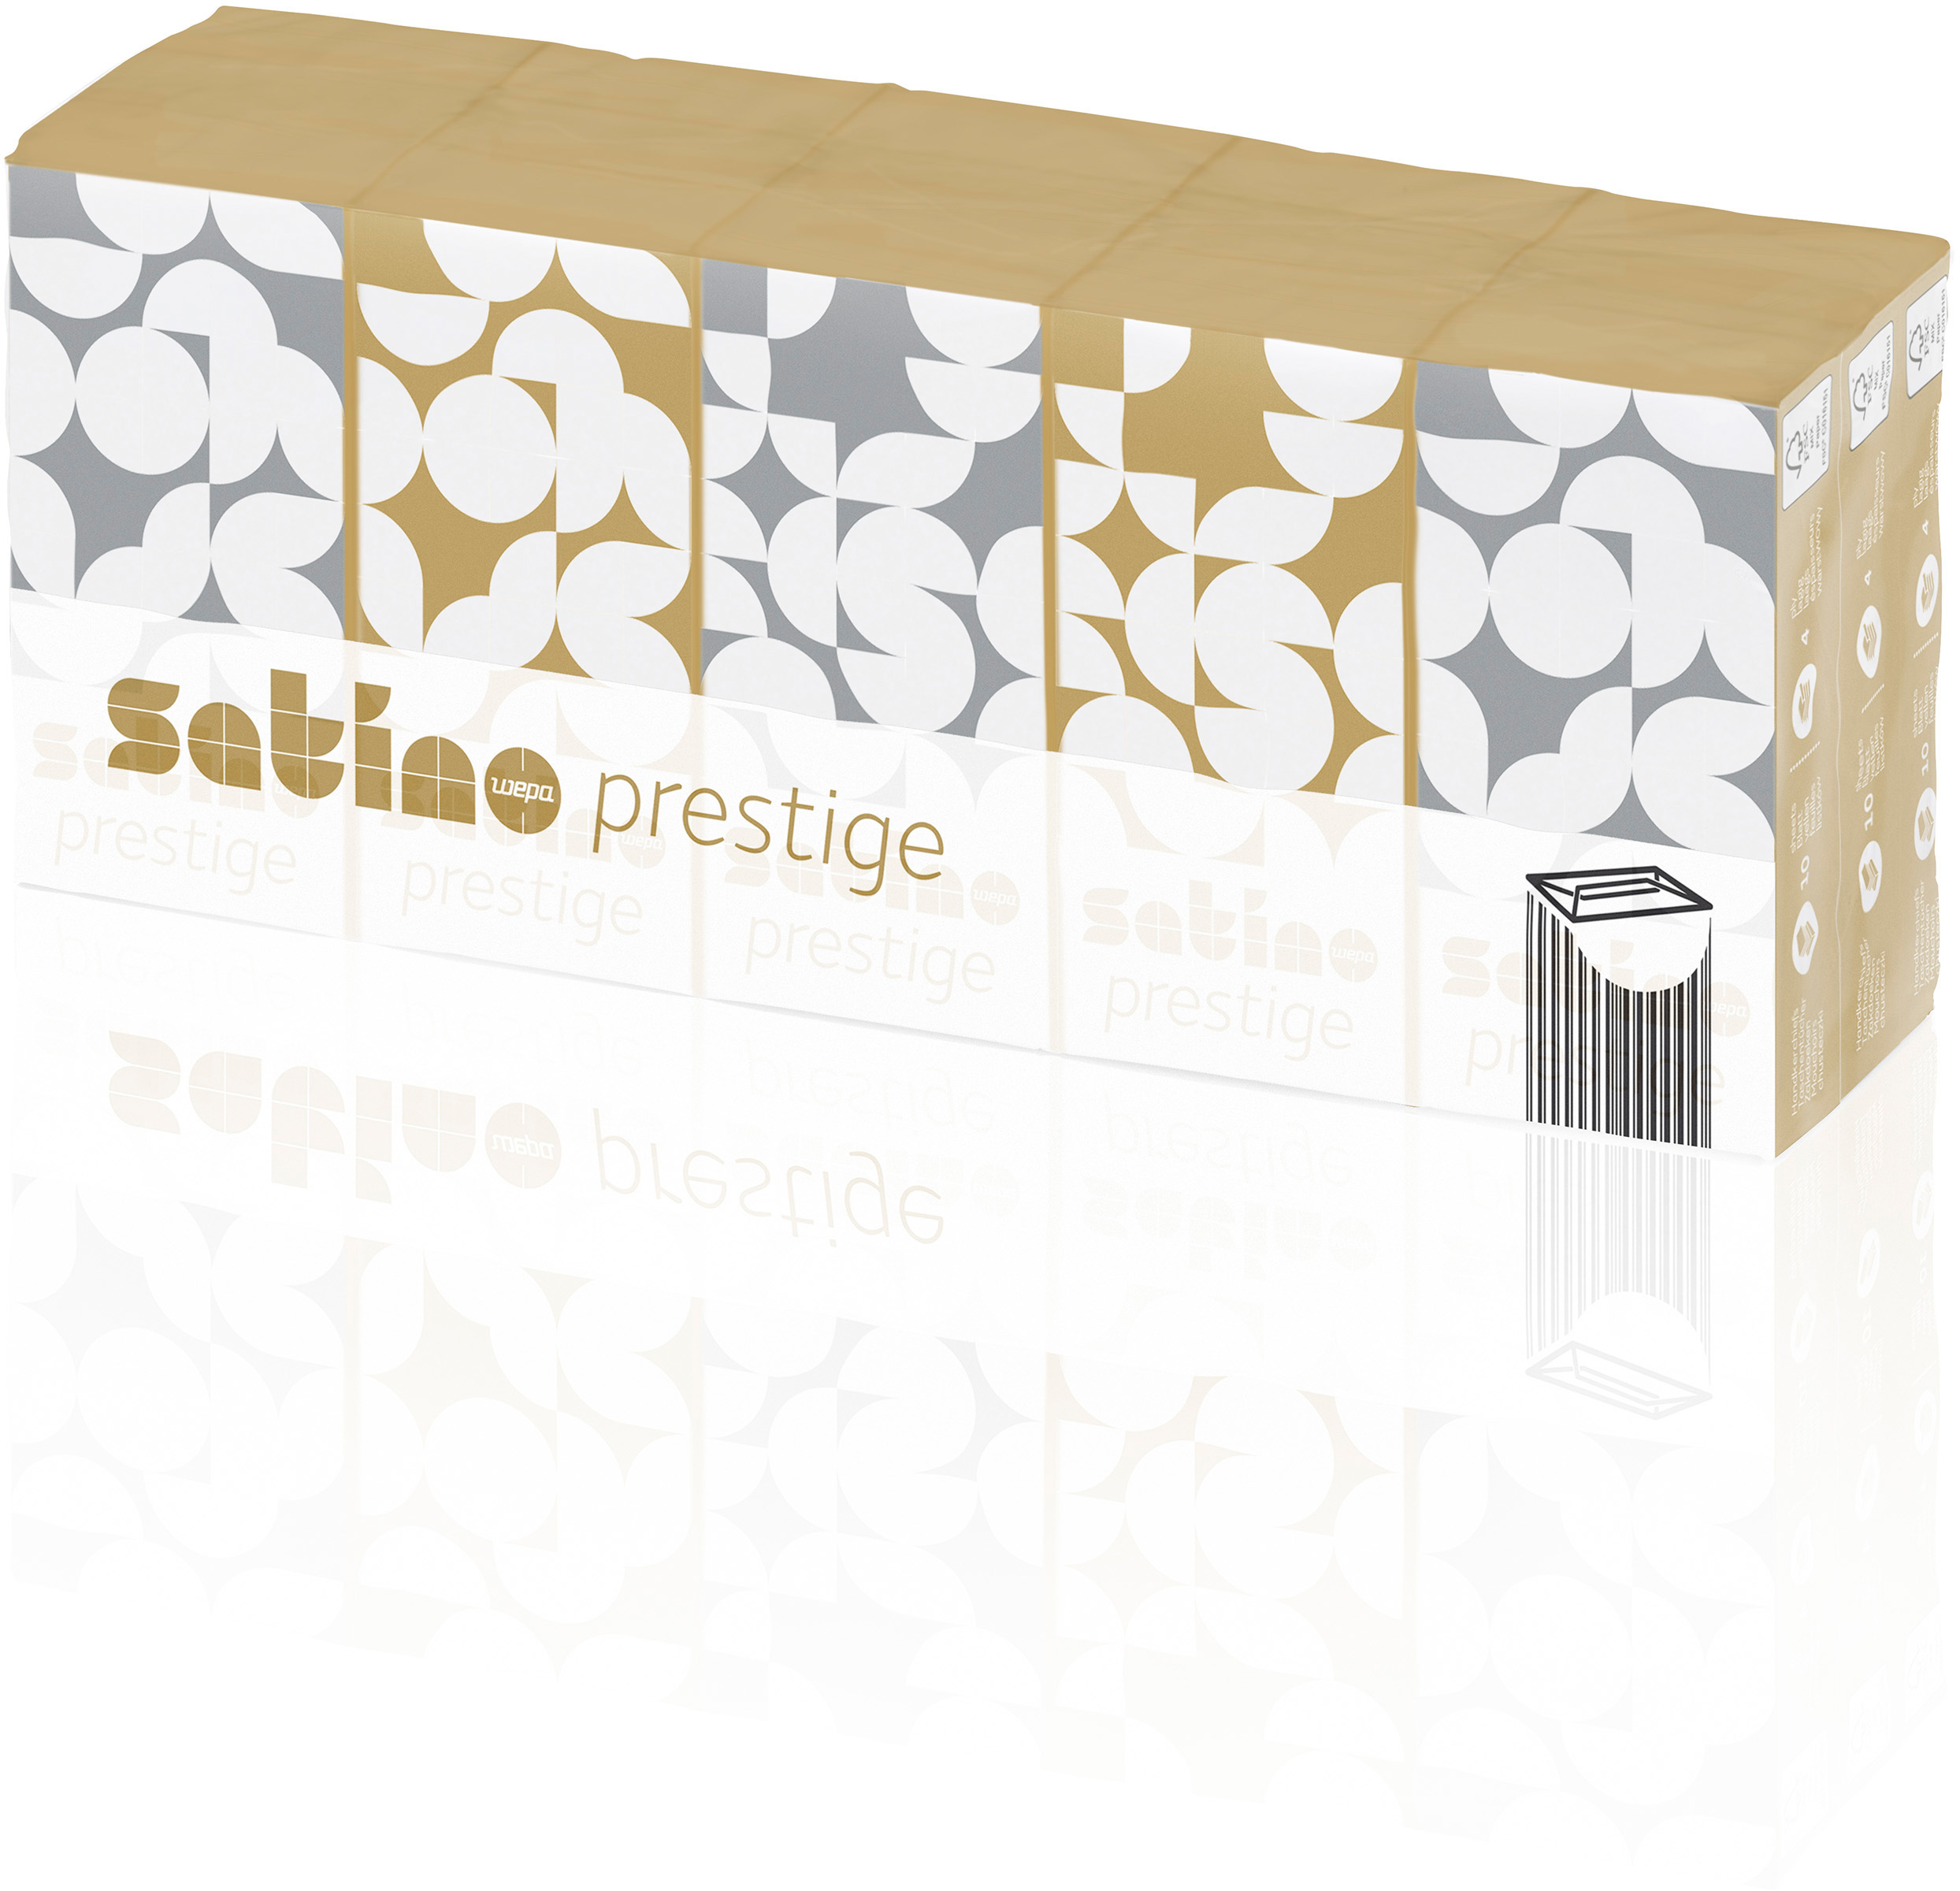 SATINO Mouchoirs Satino Prestige 113940 4 plis, 15 pcs. 10 flls.